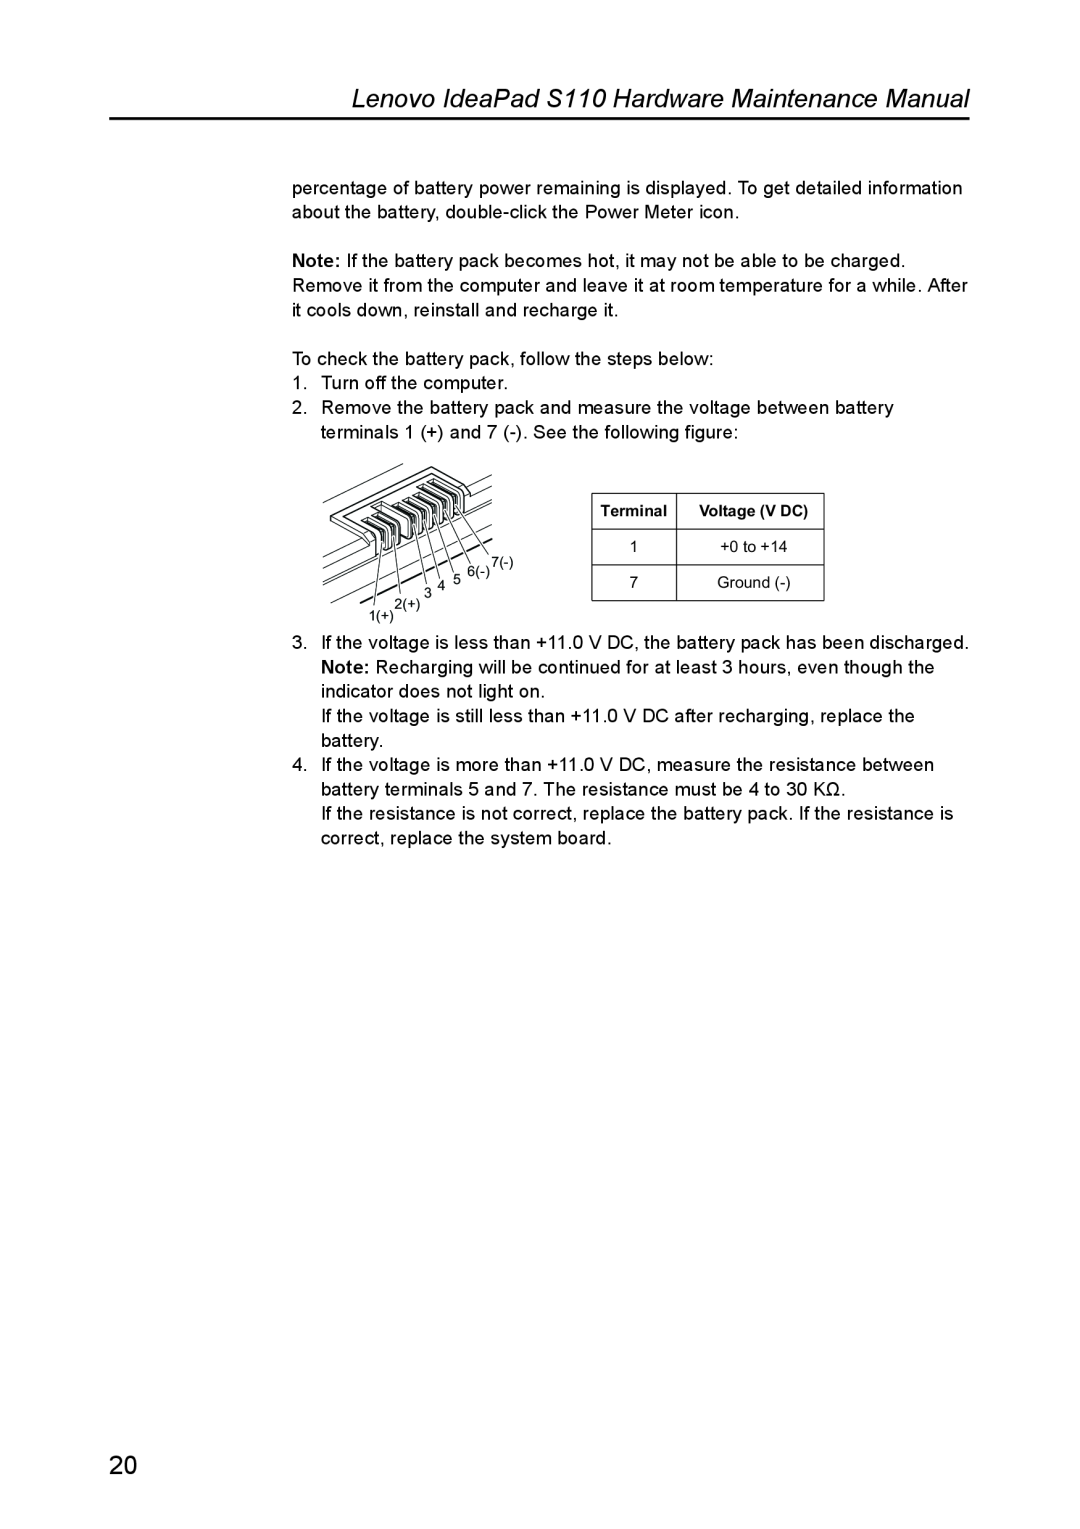 Lenovo manual Lenovo IdeaPad S110 Hardware Maintenance Manual, To check the battery pack, follow the steps below 